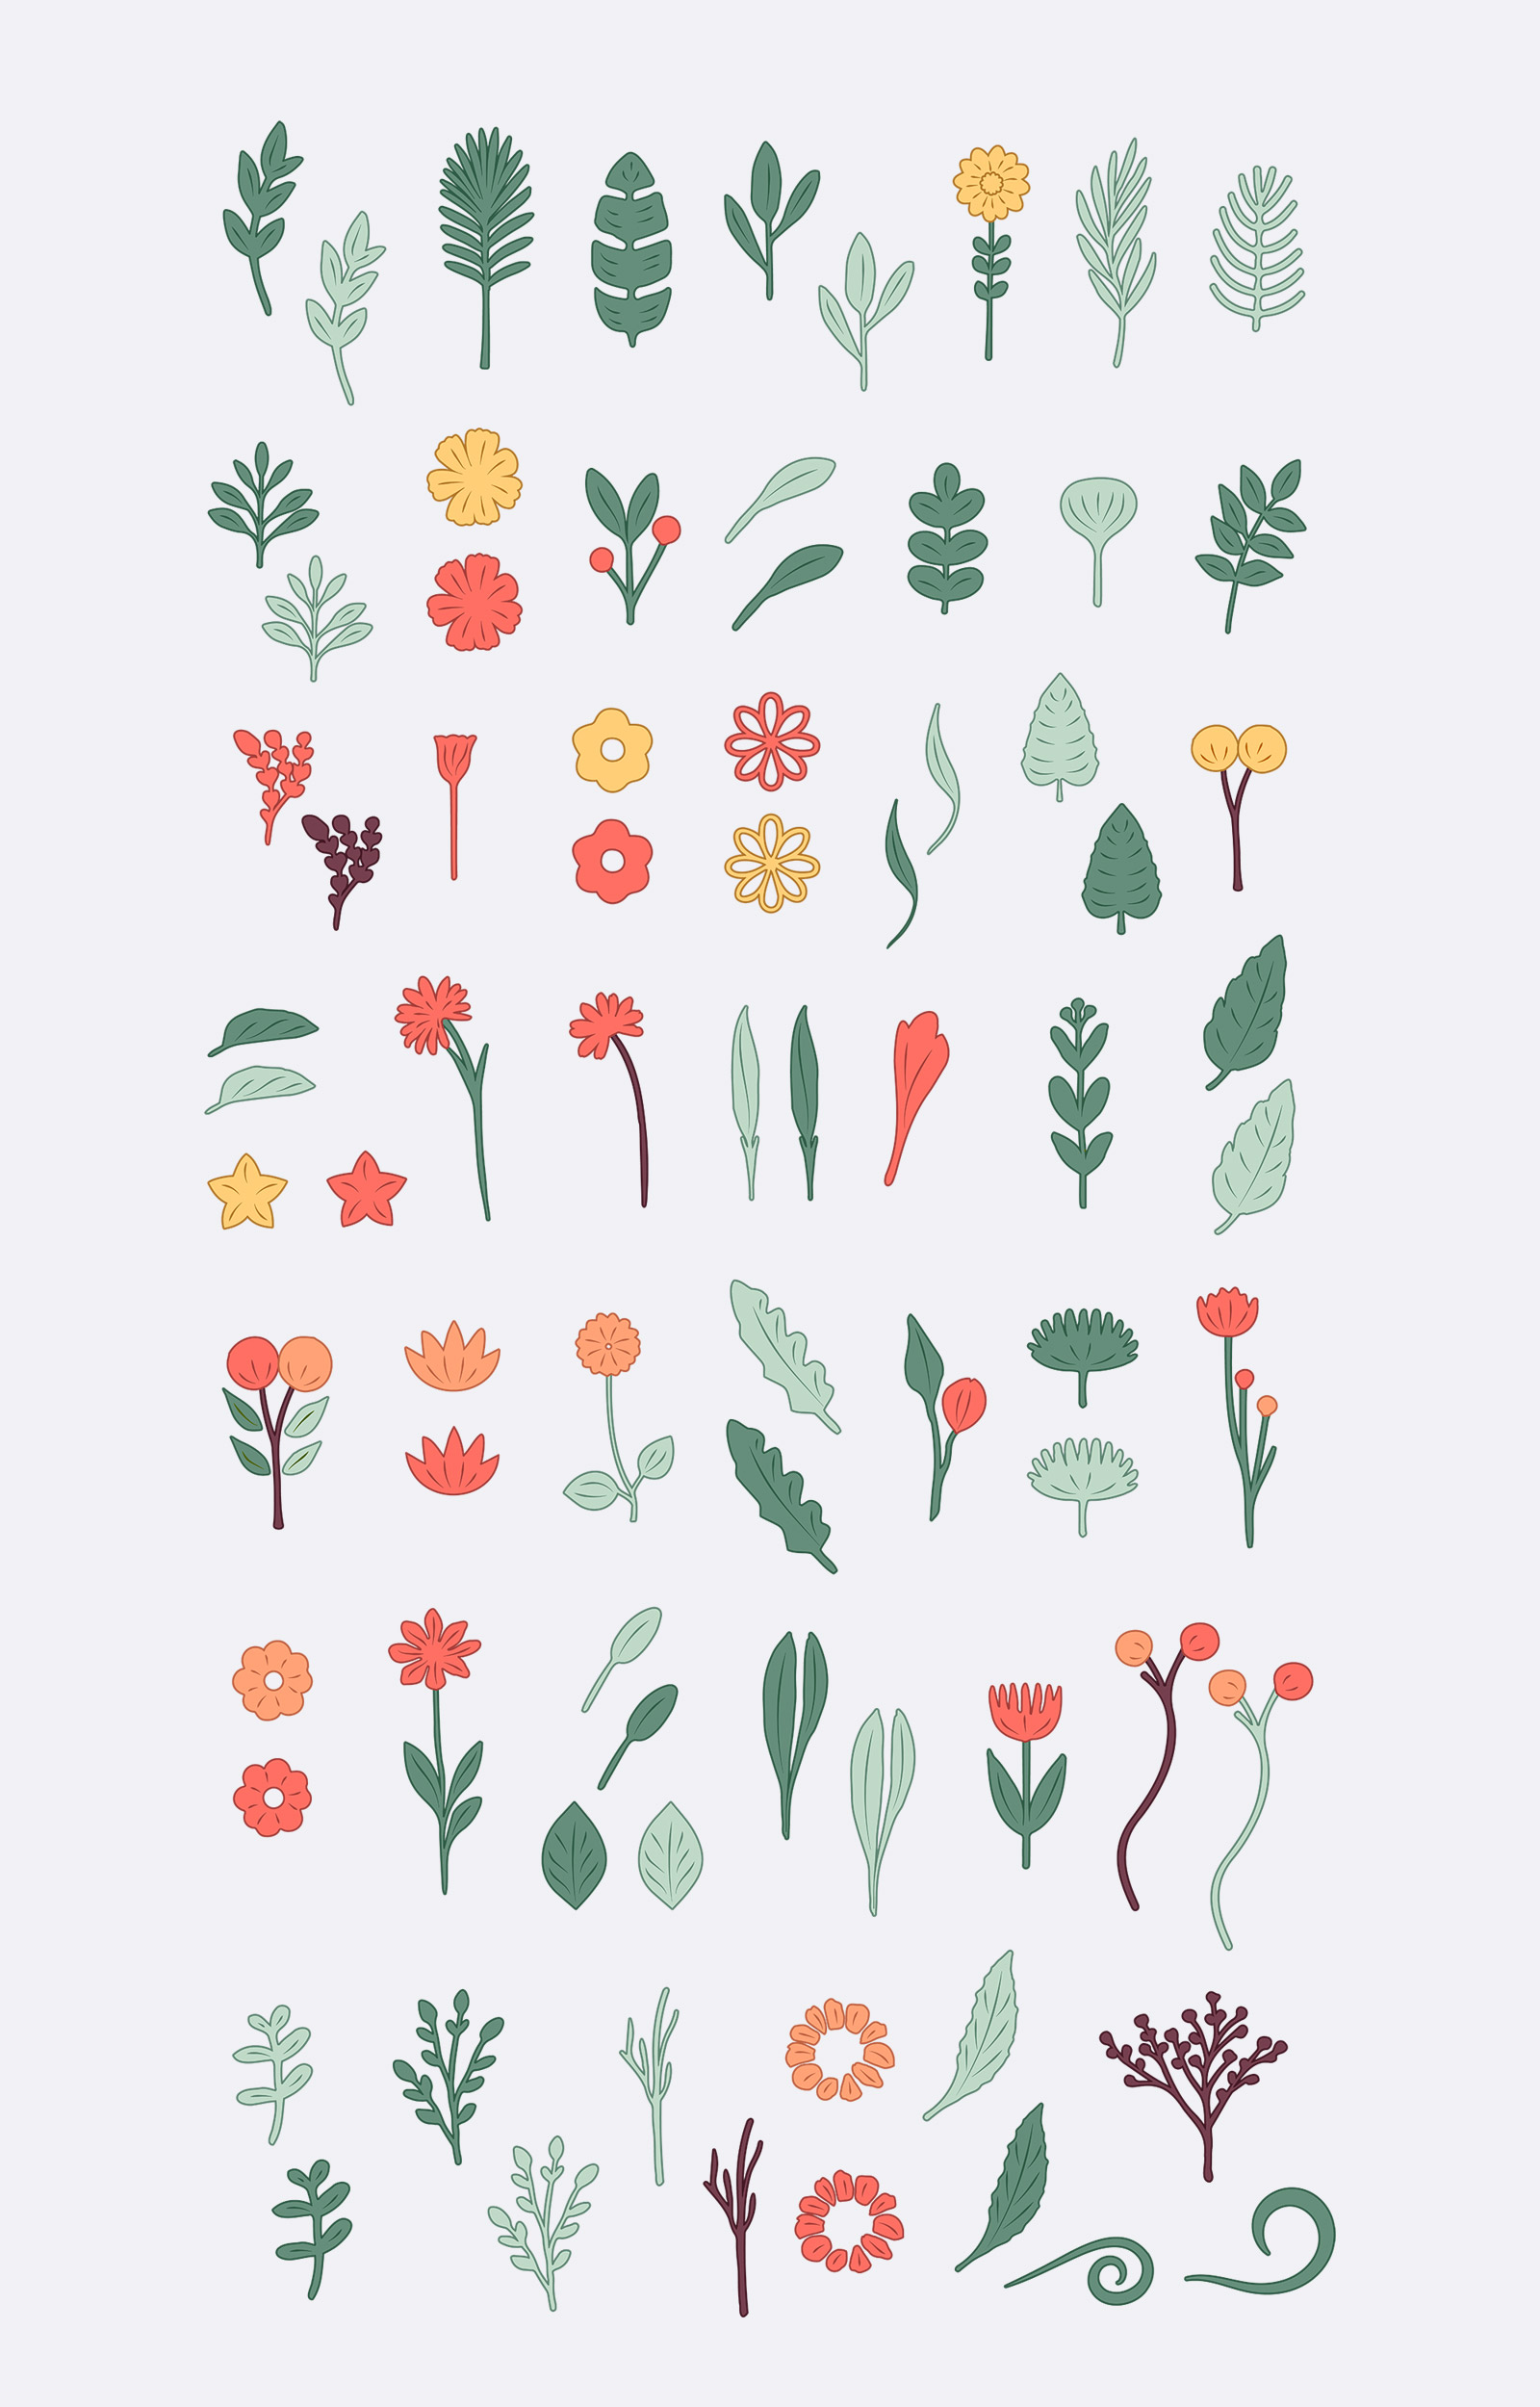 Nature botanical vector elements